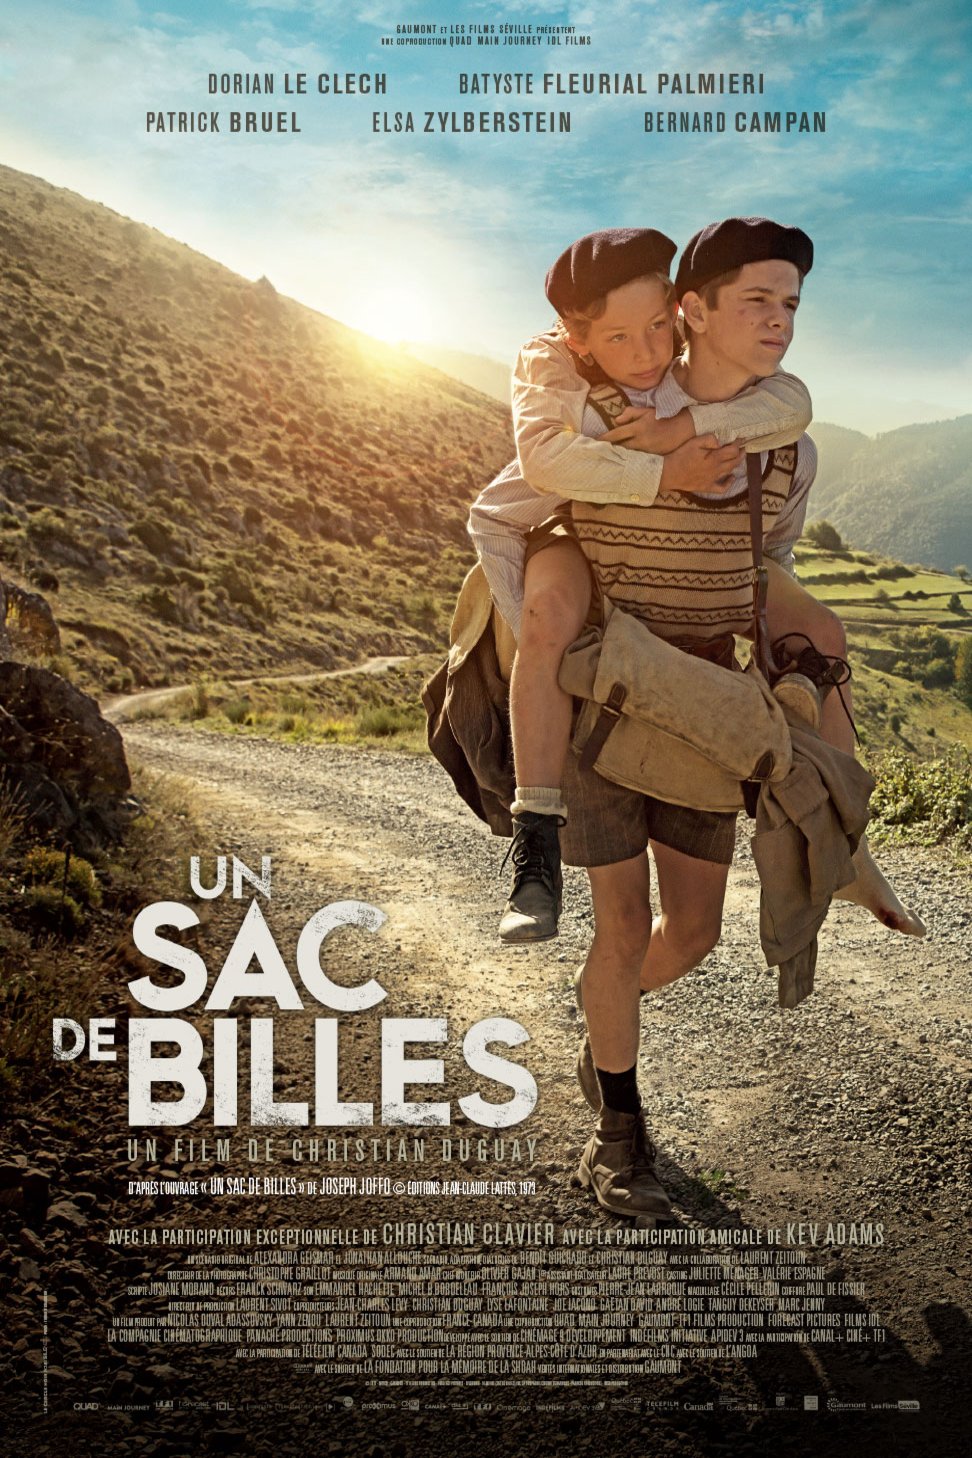 Poster of the movie Un Sac de billes